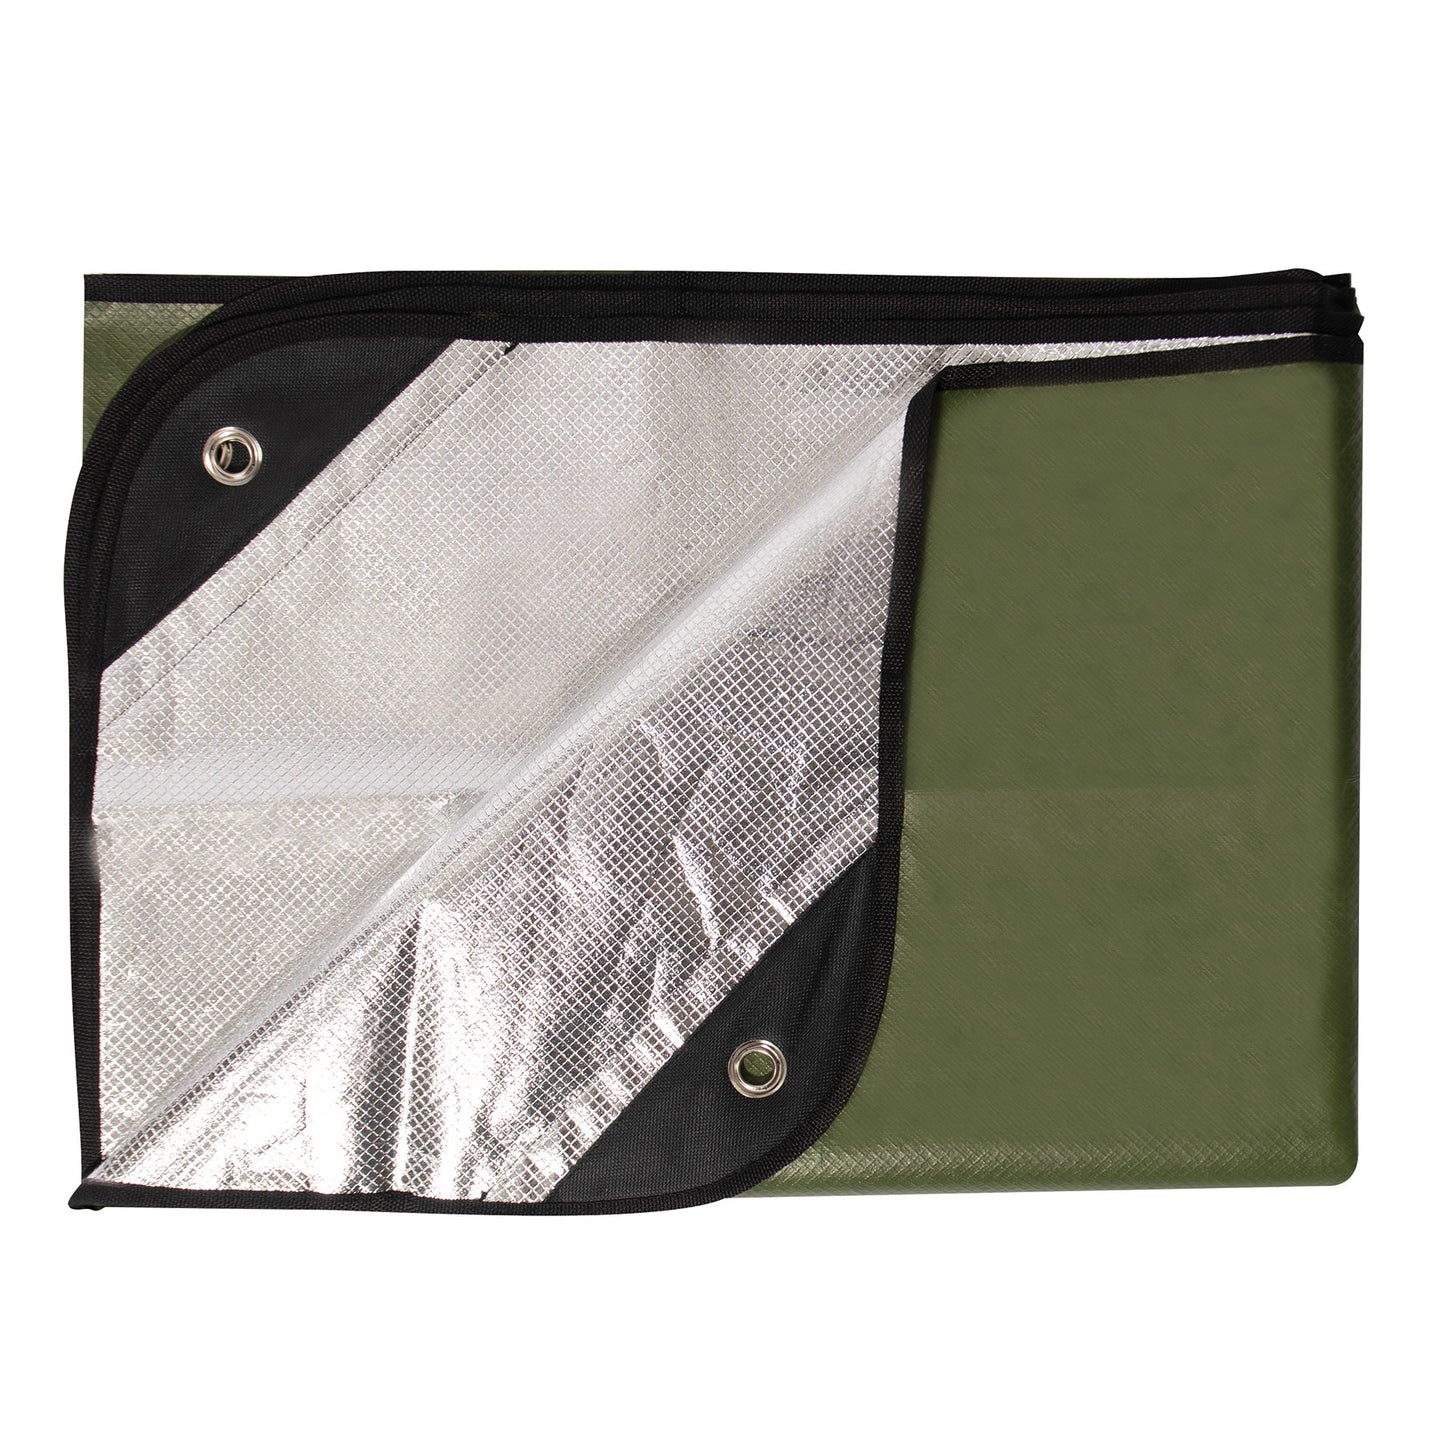 Rothco Heavy Duty Survival Blanket - Olive Drab